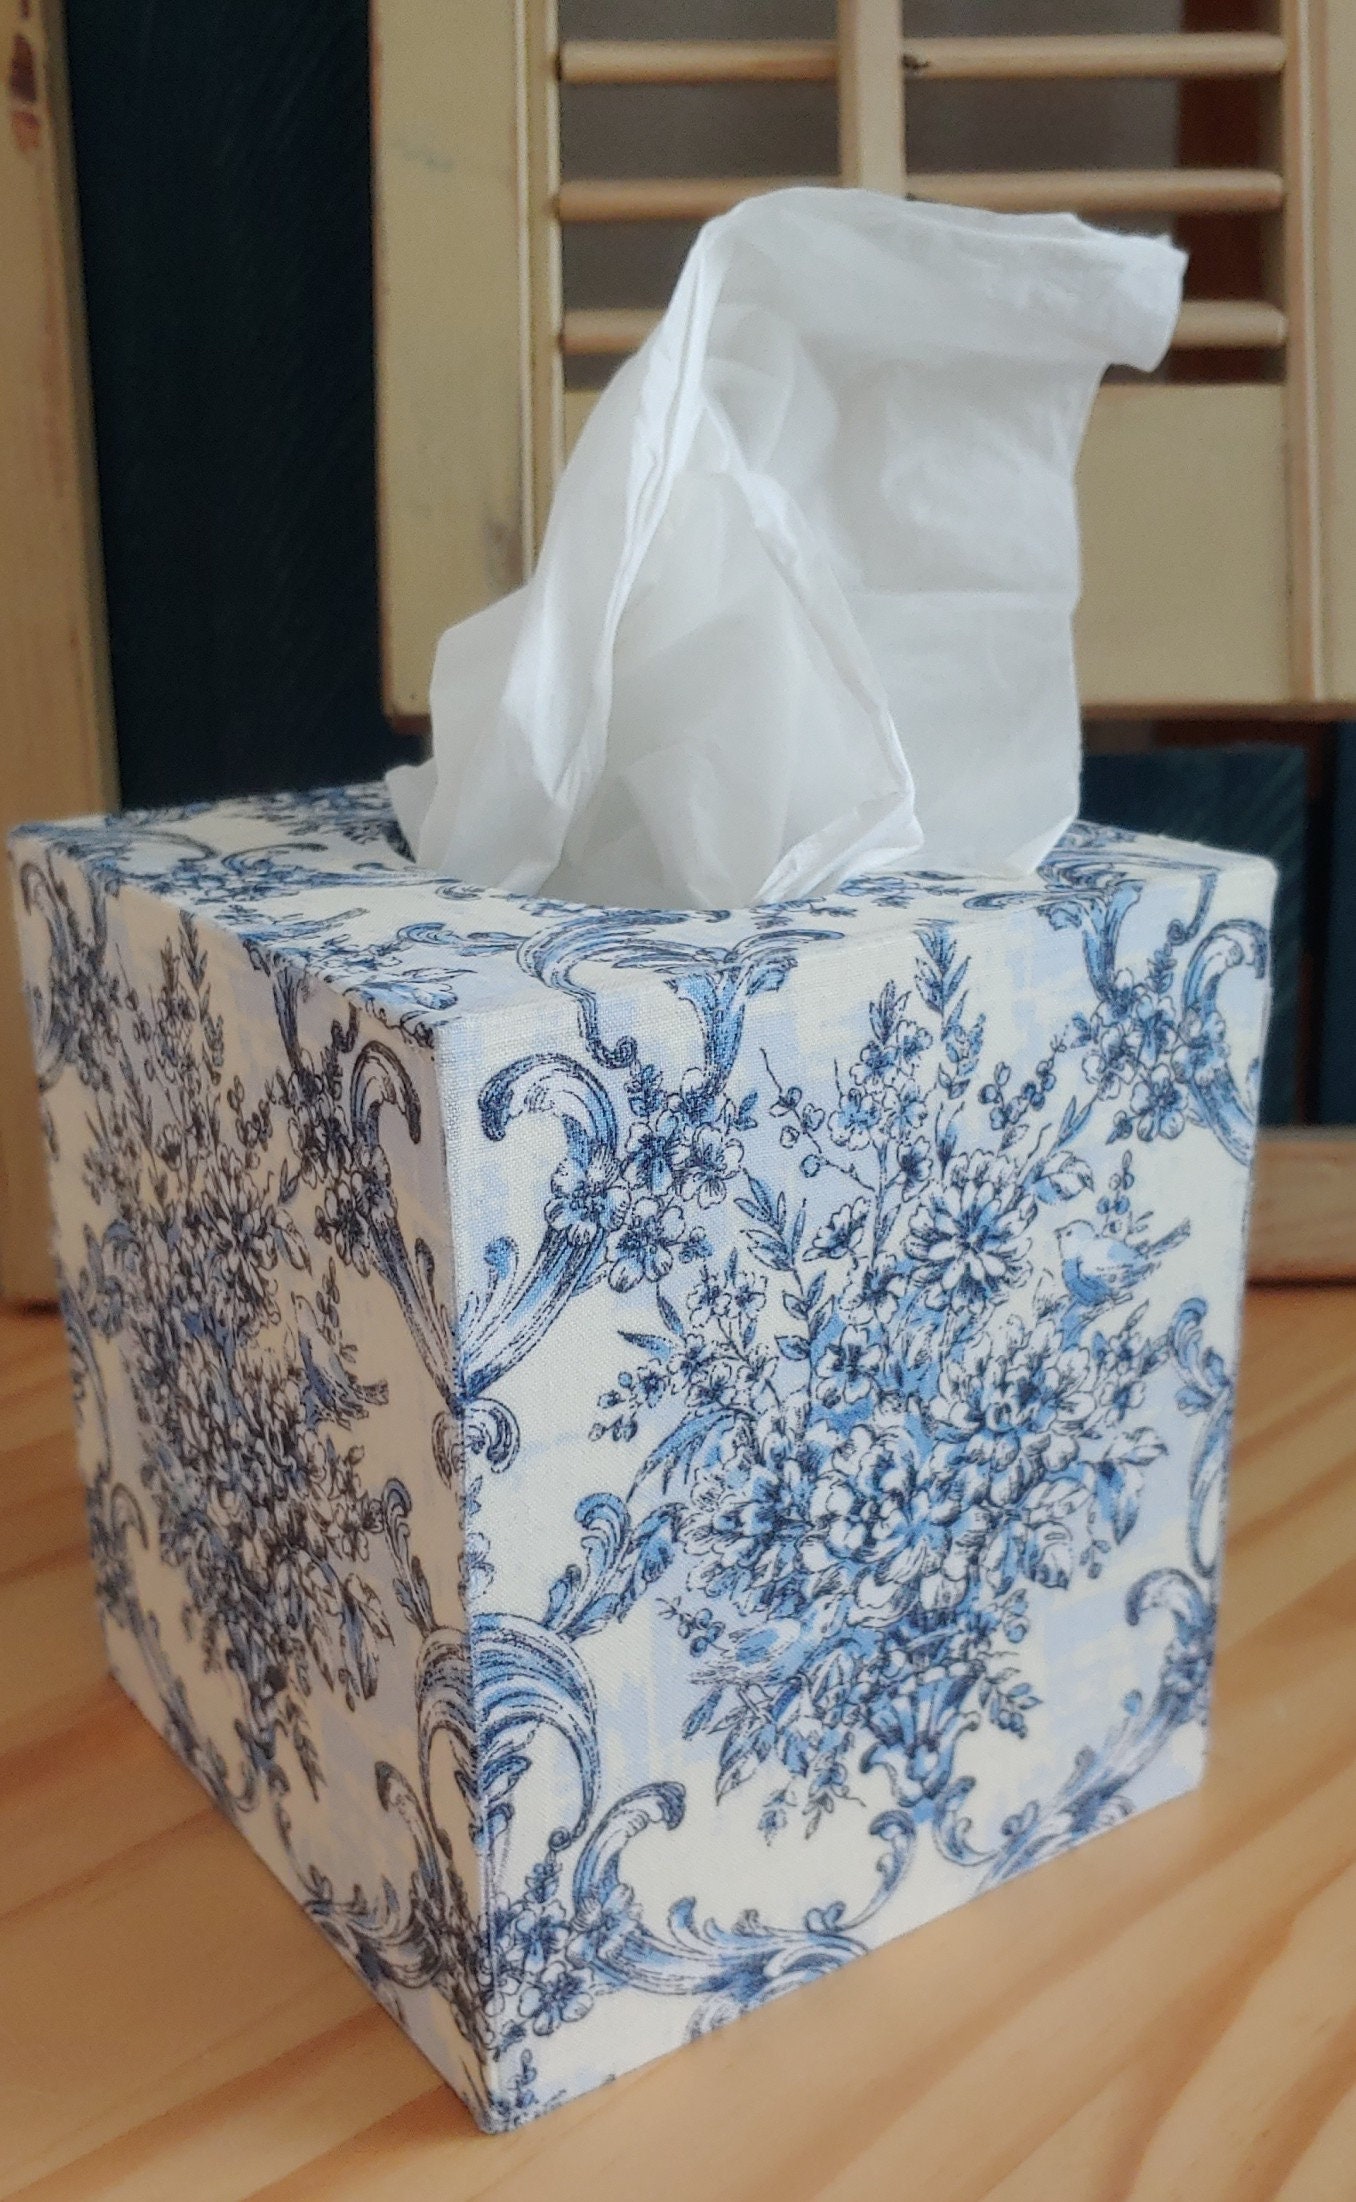 1pc Cheese Ceramic Tissue Box Holder, Rabbit & Bowknot Decorative